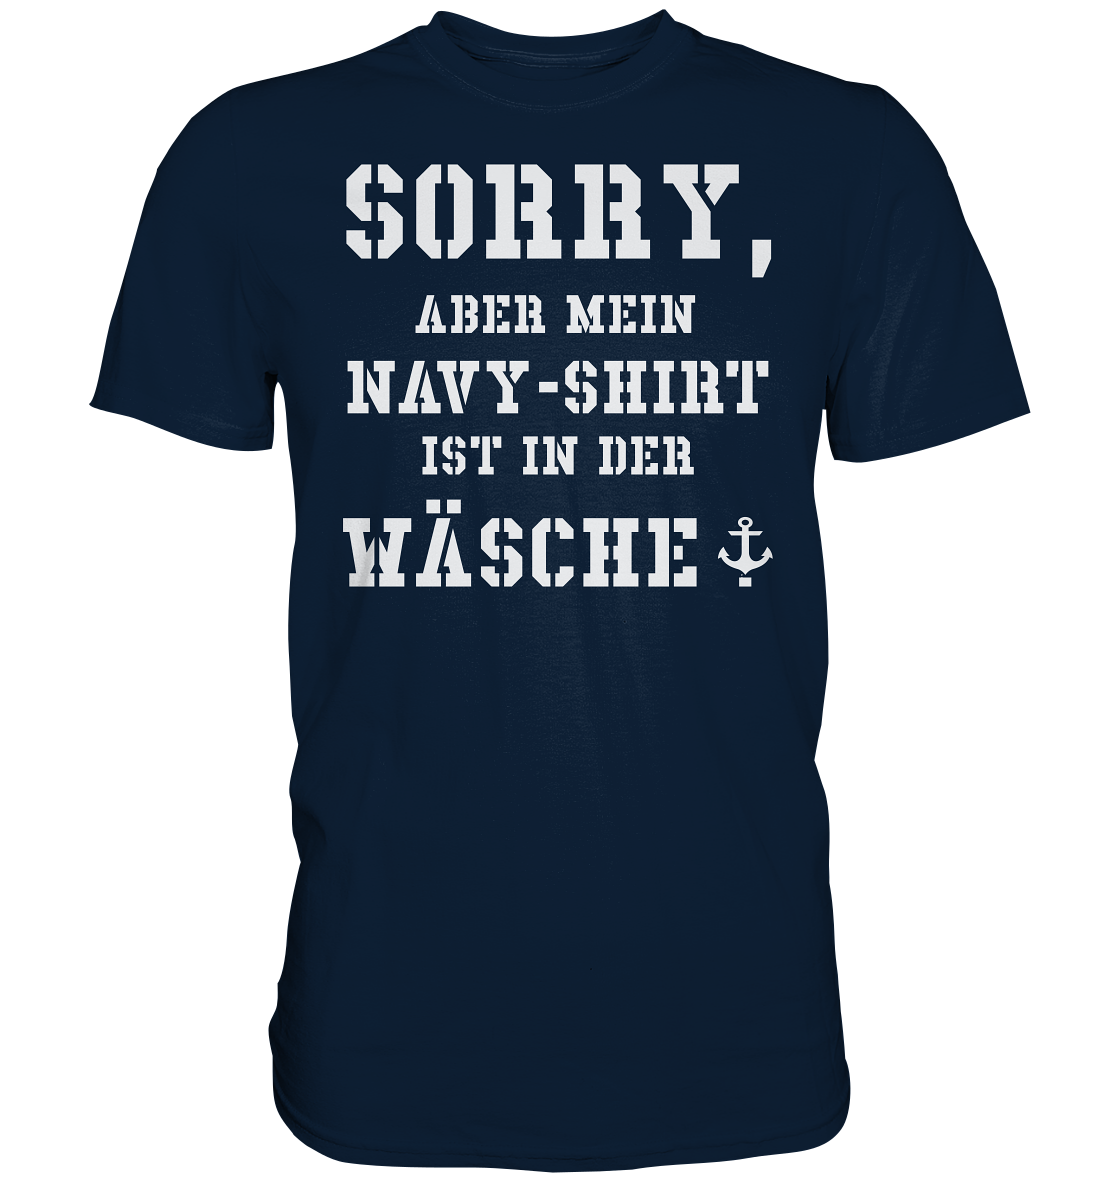 Sorry, aber mein Navy-Shirt... - Premium Shirt